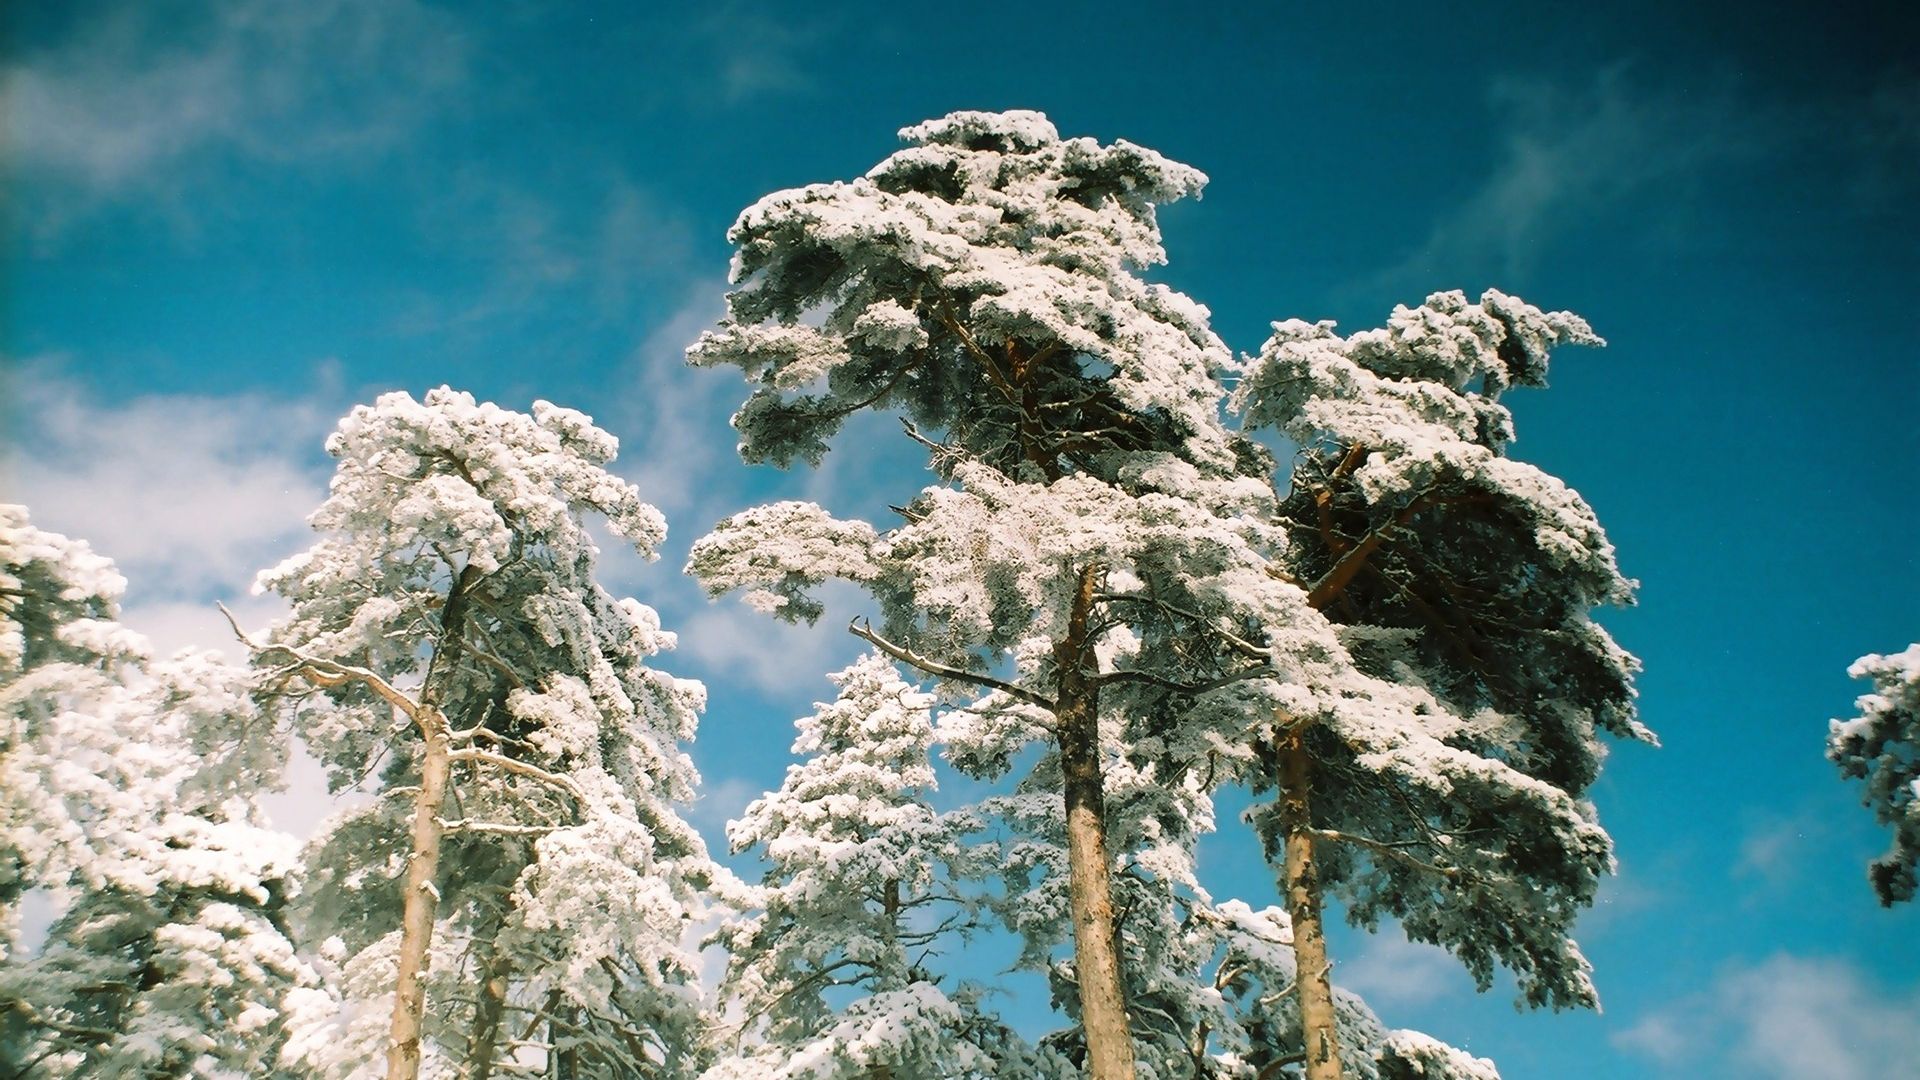 Wallpaper Pine trees in winter